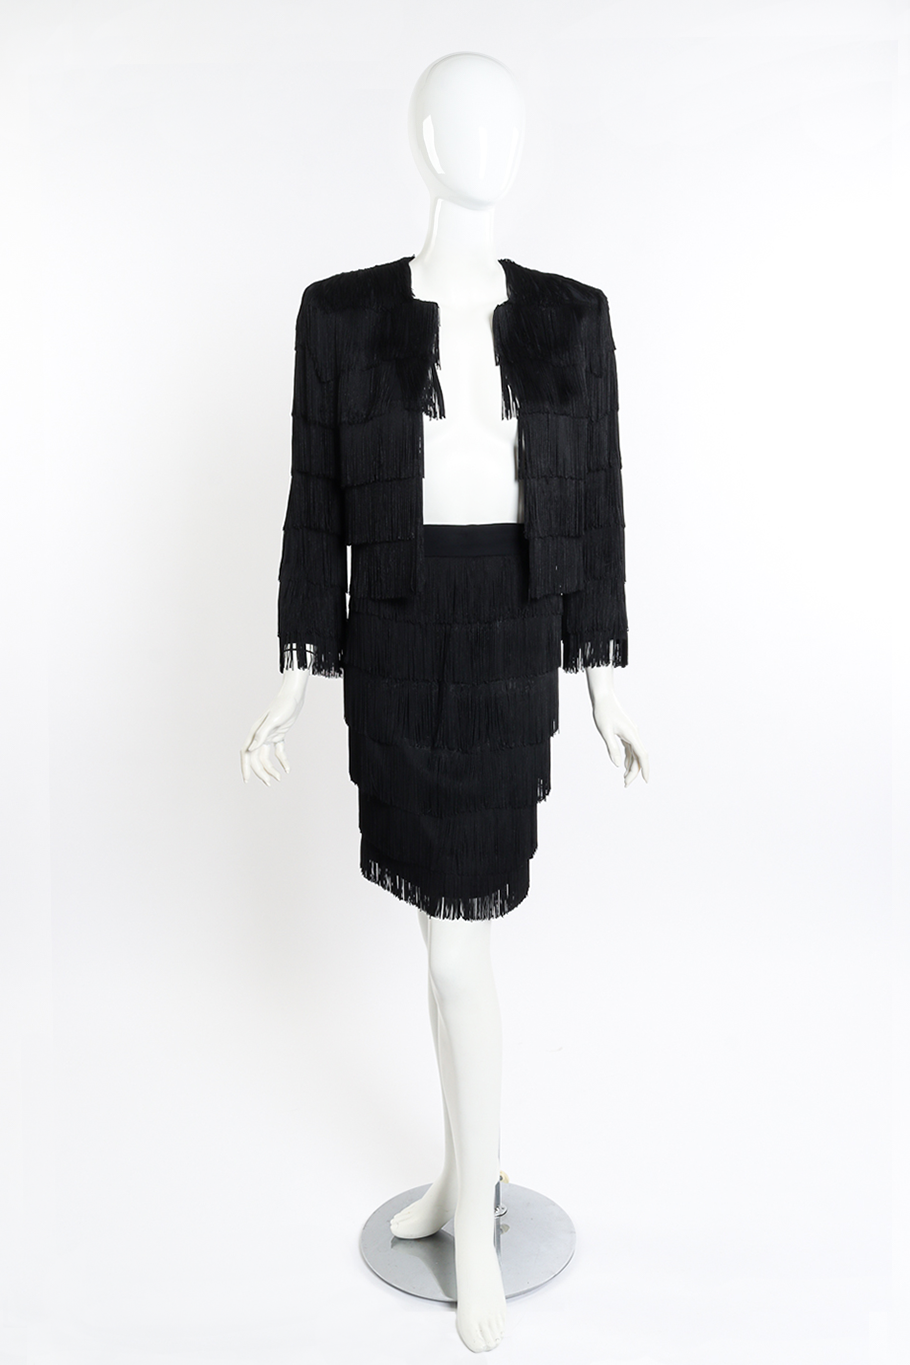 Vintage Moschino Couture Fringe Jacket and Skirt Set front on mannequin @recessla